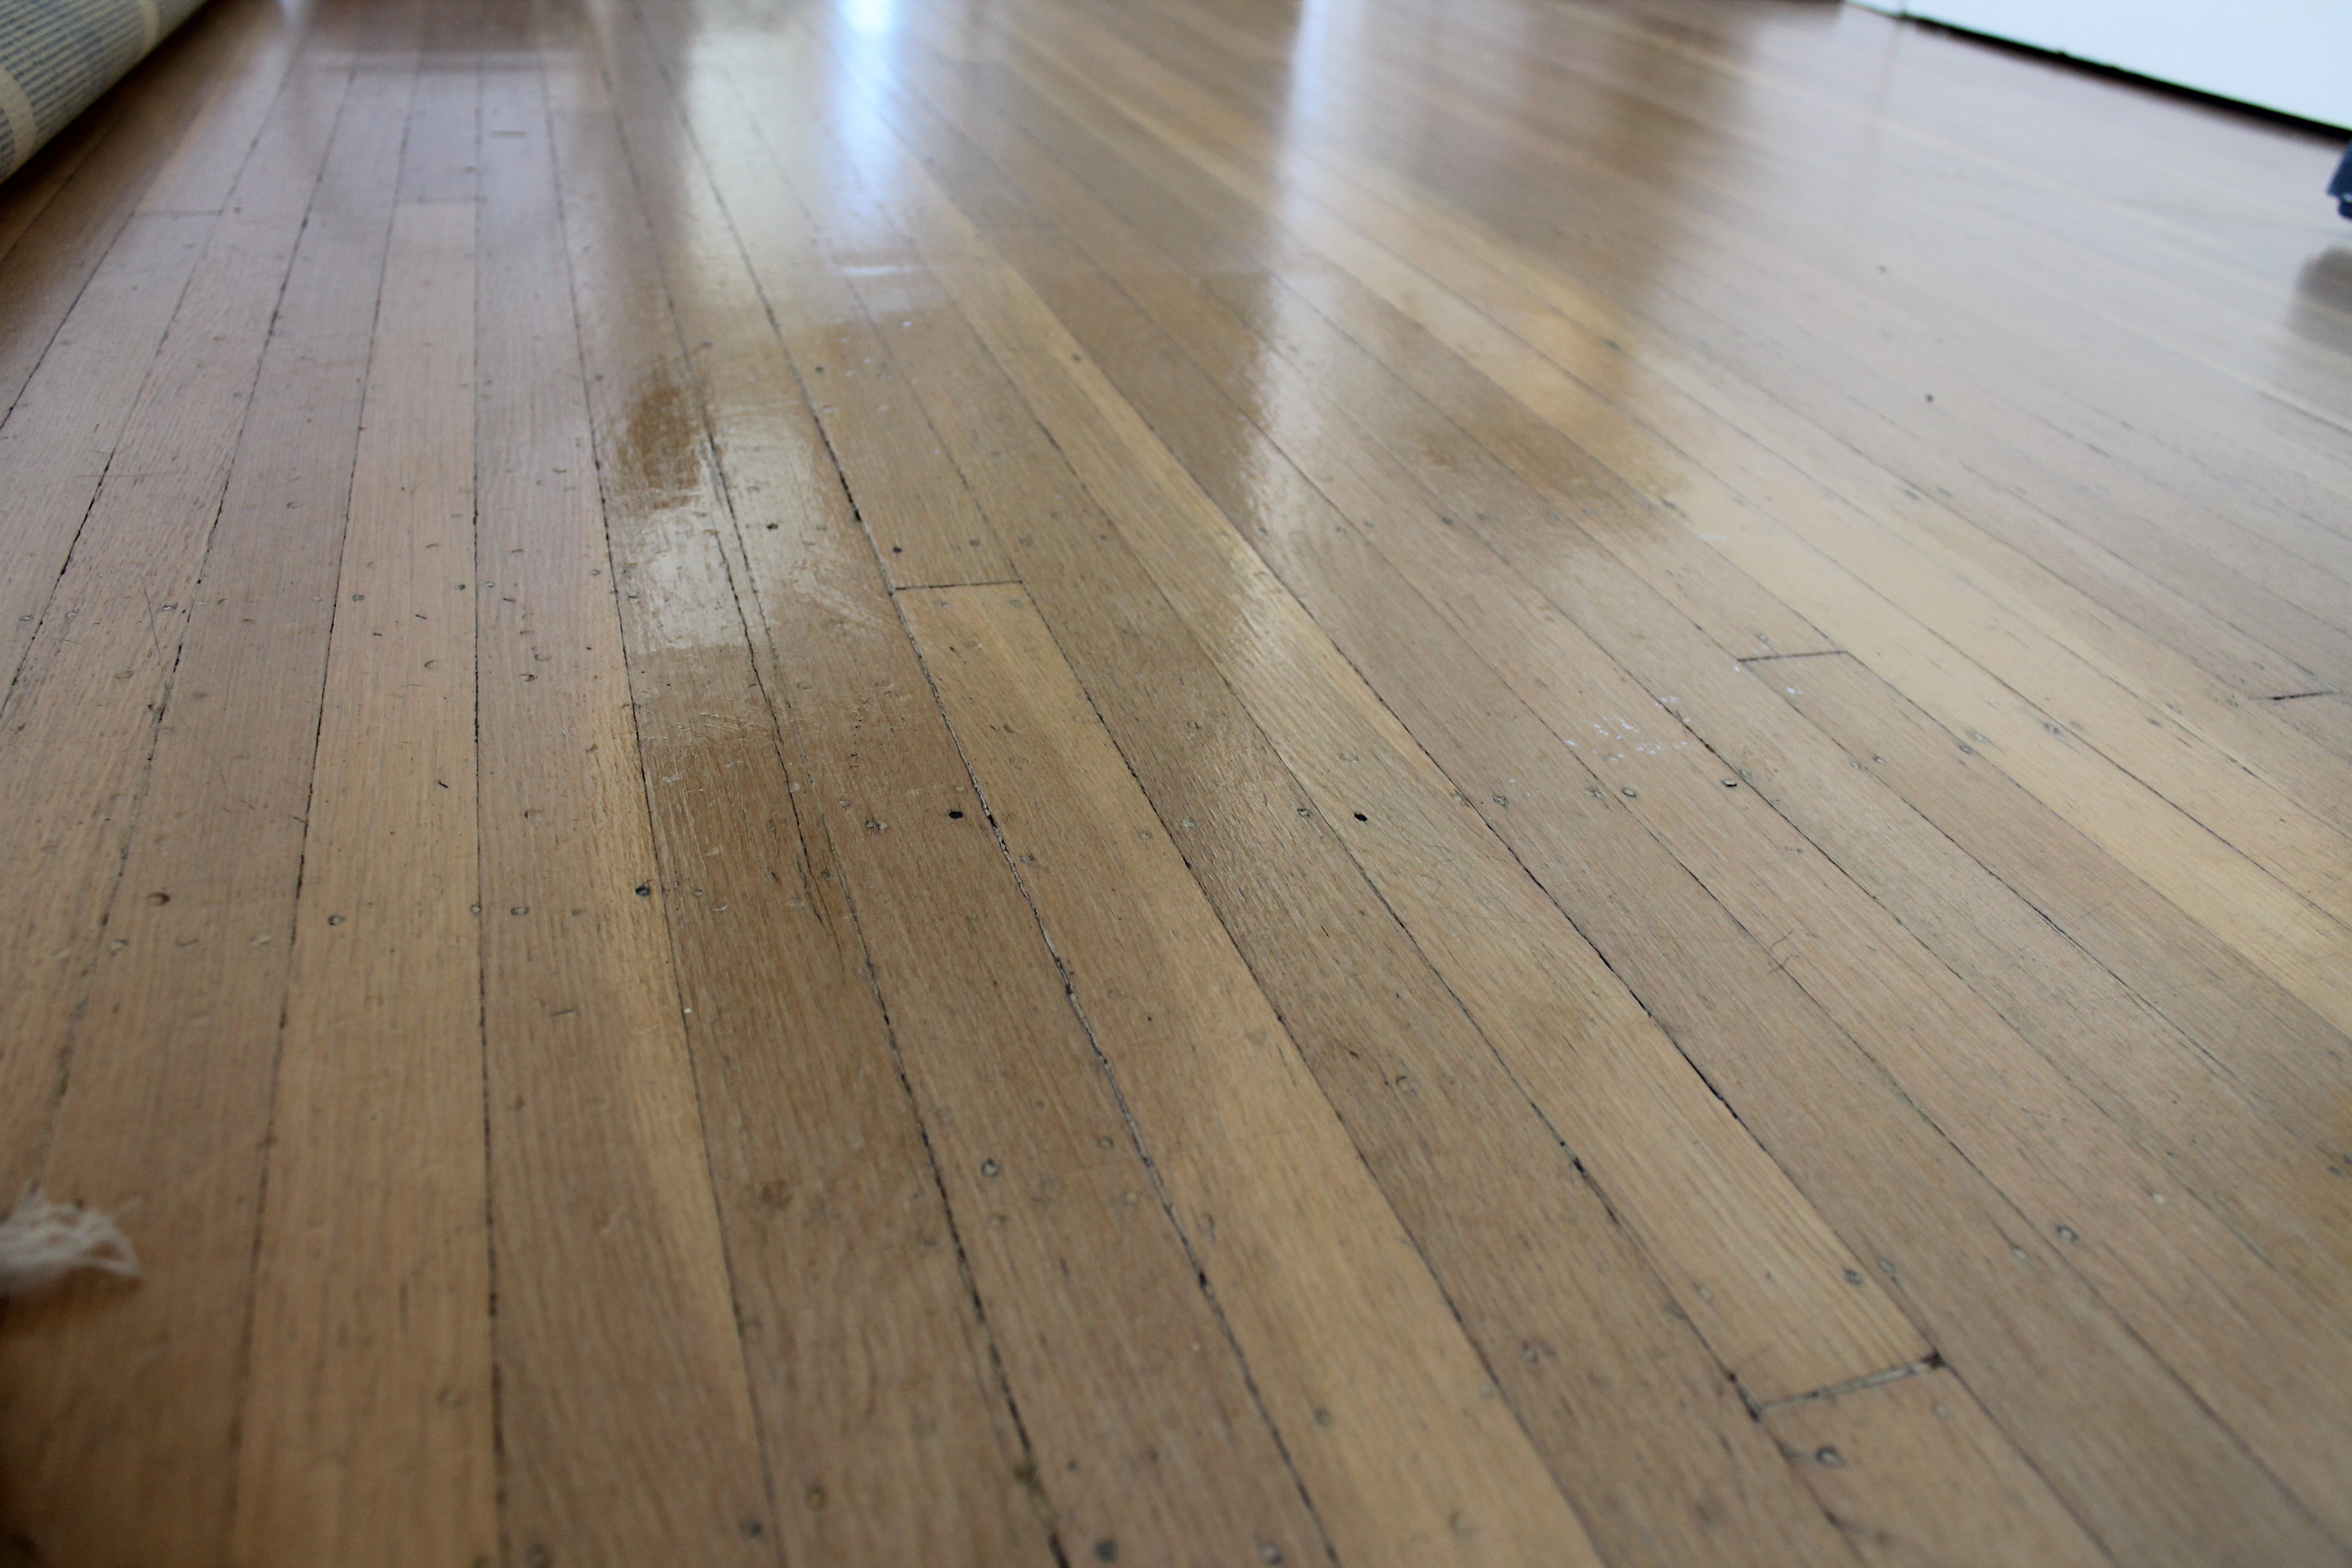 Best ideas about DIY Wood Floor Polish
. Save or Pin DIY Wood Floor Polish Now.